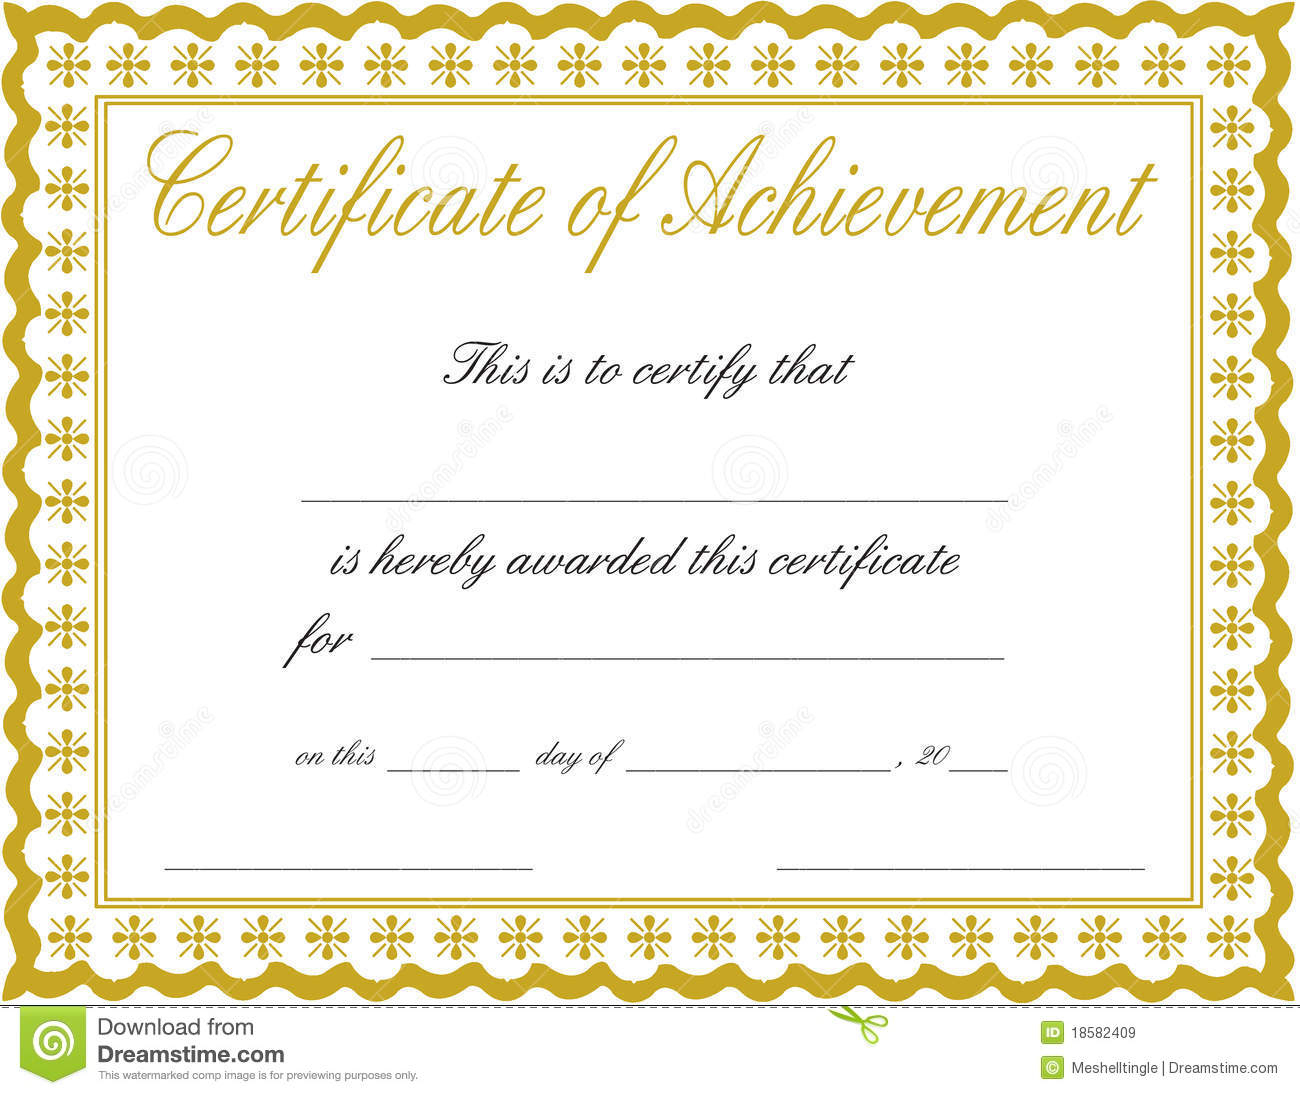 Certificate-Achievement-Printable-Doc-Pdf- - Free Printable Certificates Of Achievement